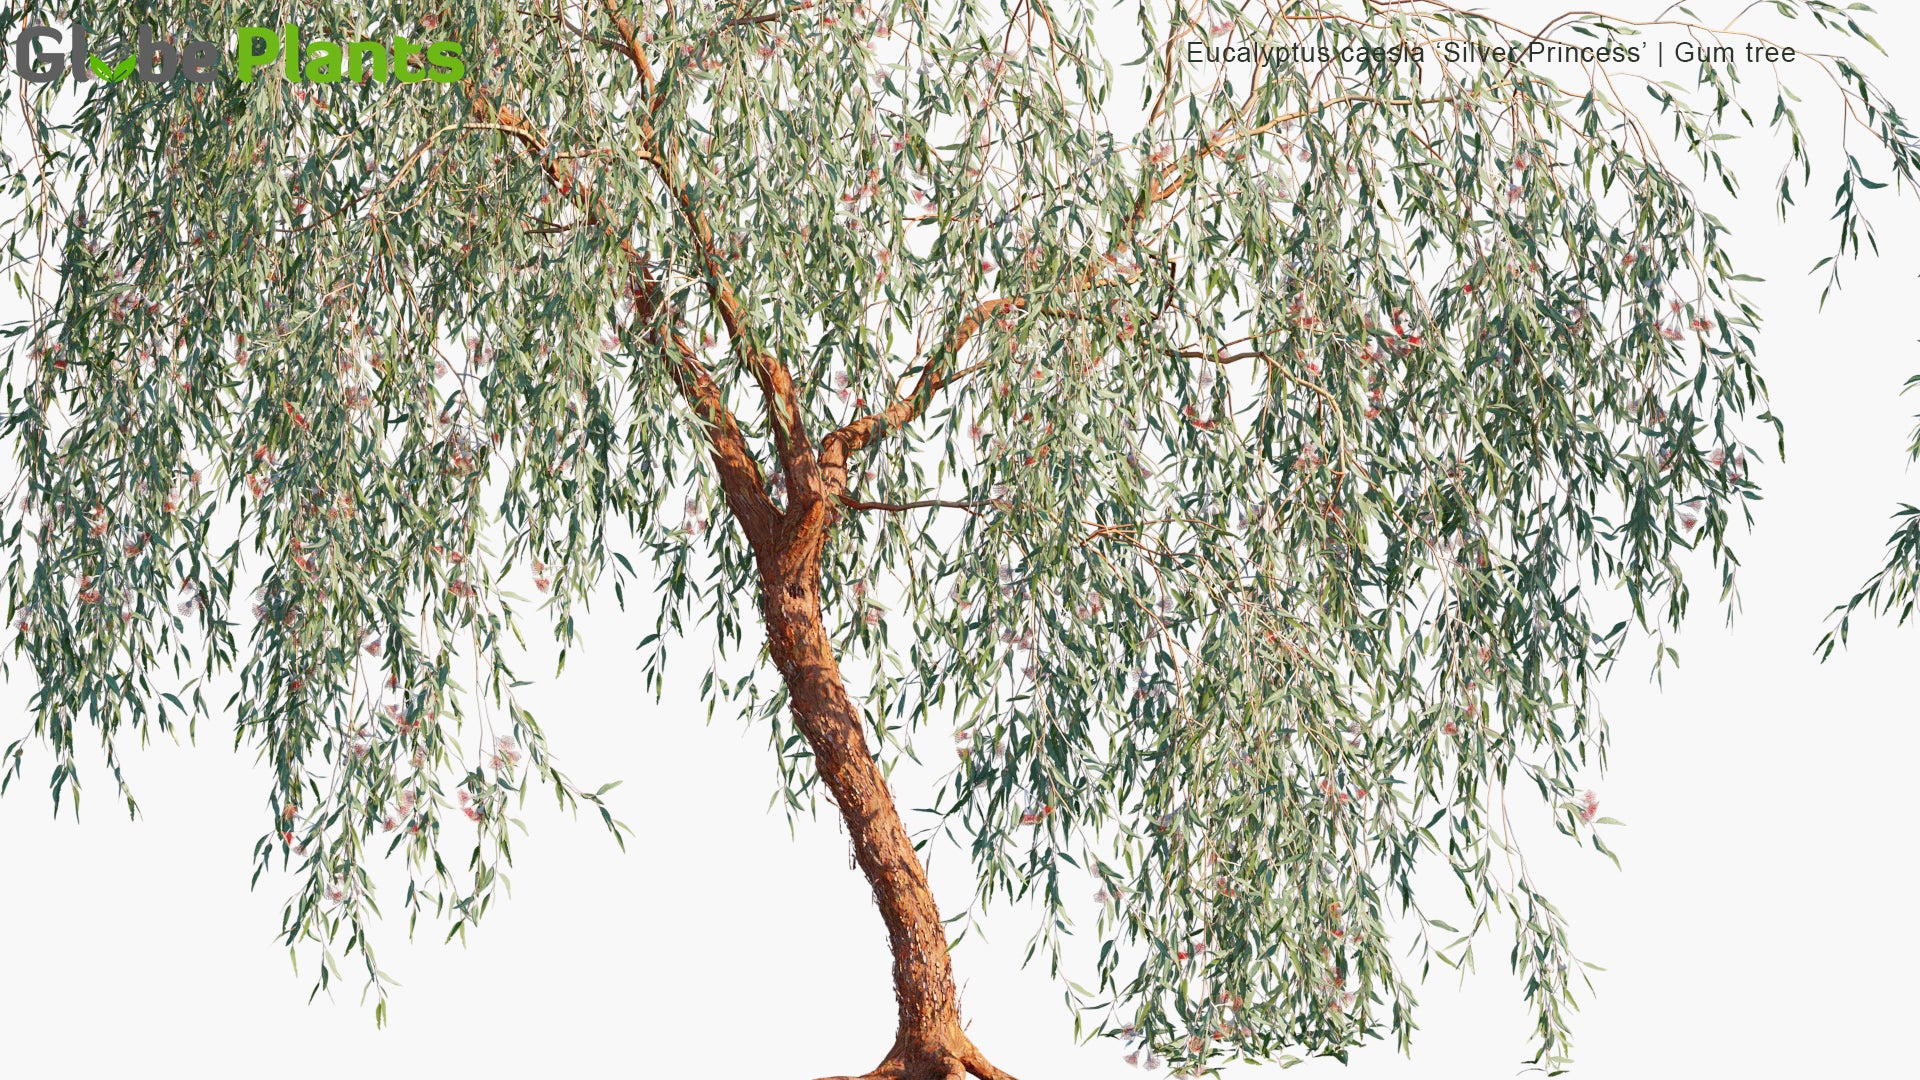 Eucalyptus Caesia 'Silver Princess' 3D Model